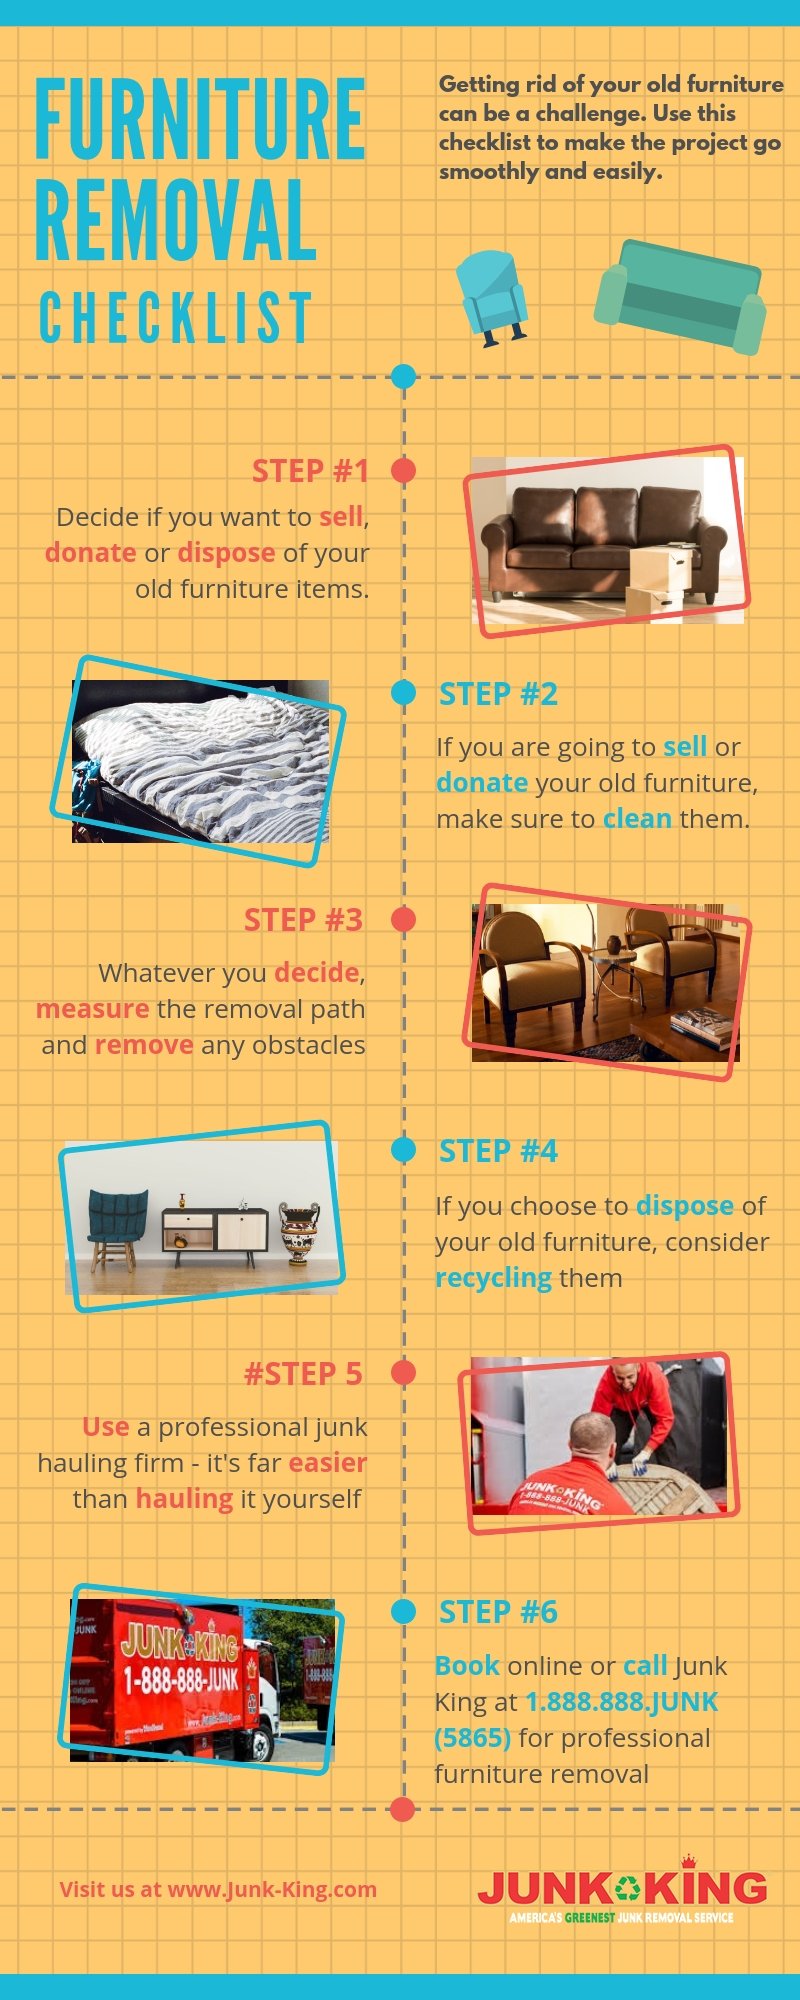 Junk King Furniture Removal Checklist